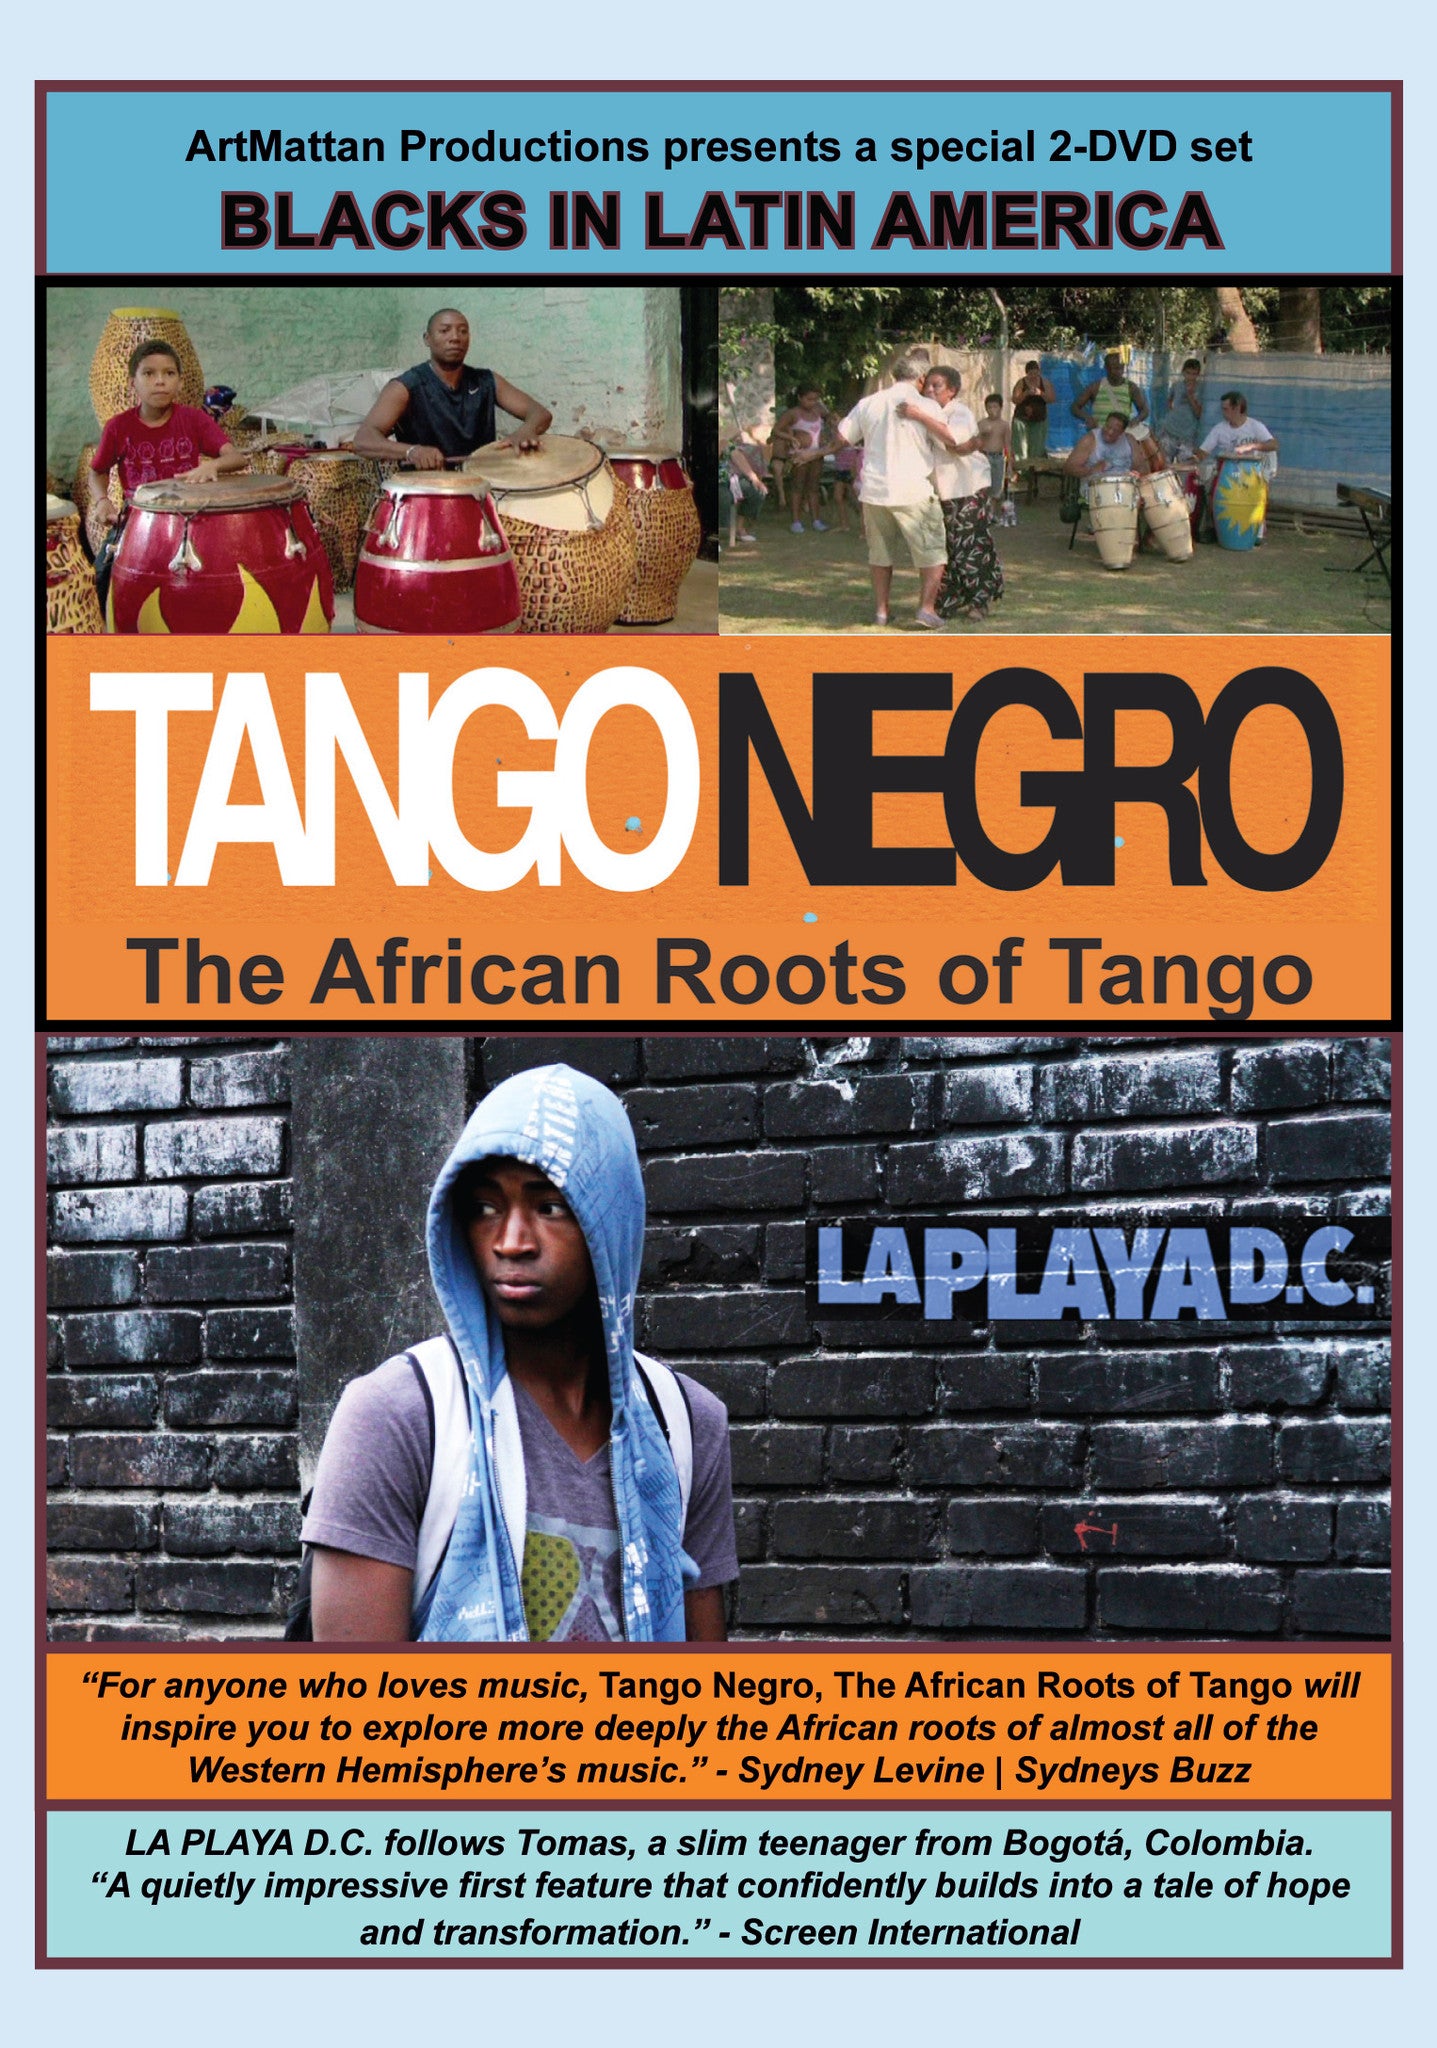 Blacks in Latin America - 2 disc set - Tango Negro: The African Roots of Tango & La Playa D.C.